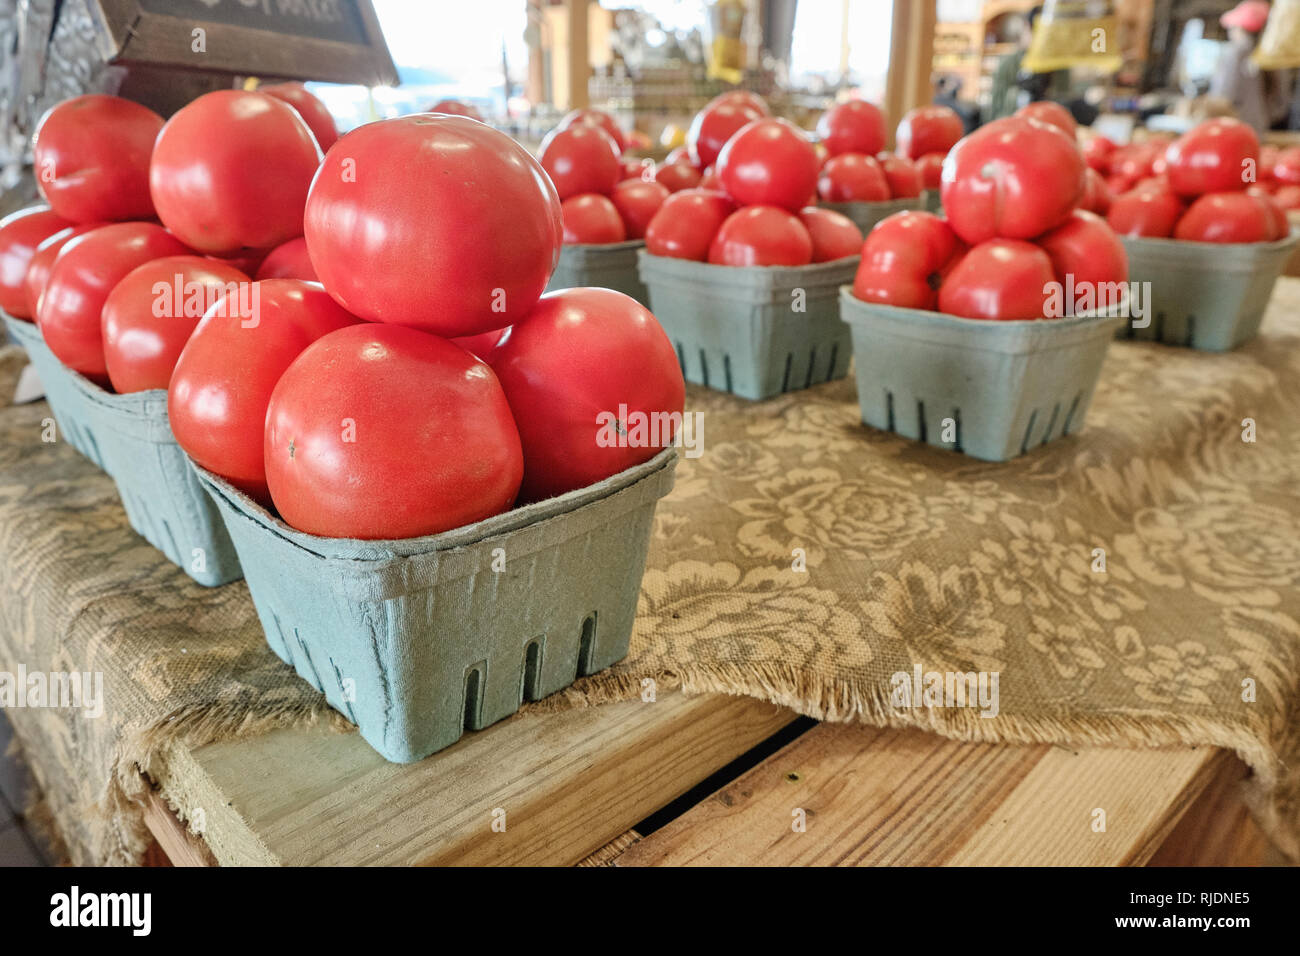 Farm fresh beefsteak tomatoes on display for sale in a rural Alabama farmer's market or roadside market in Pike Road Alabama, USA. Stock Photo